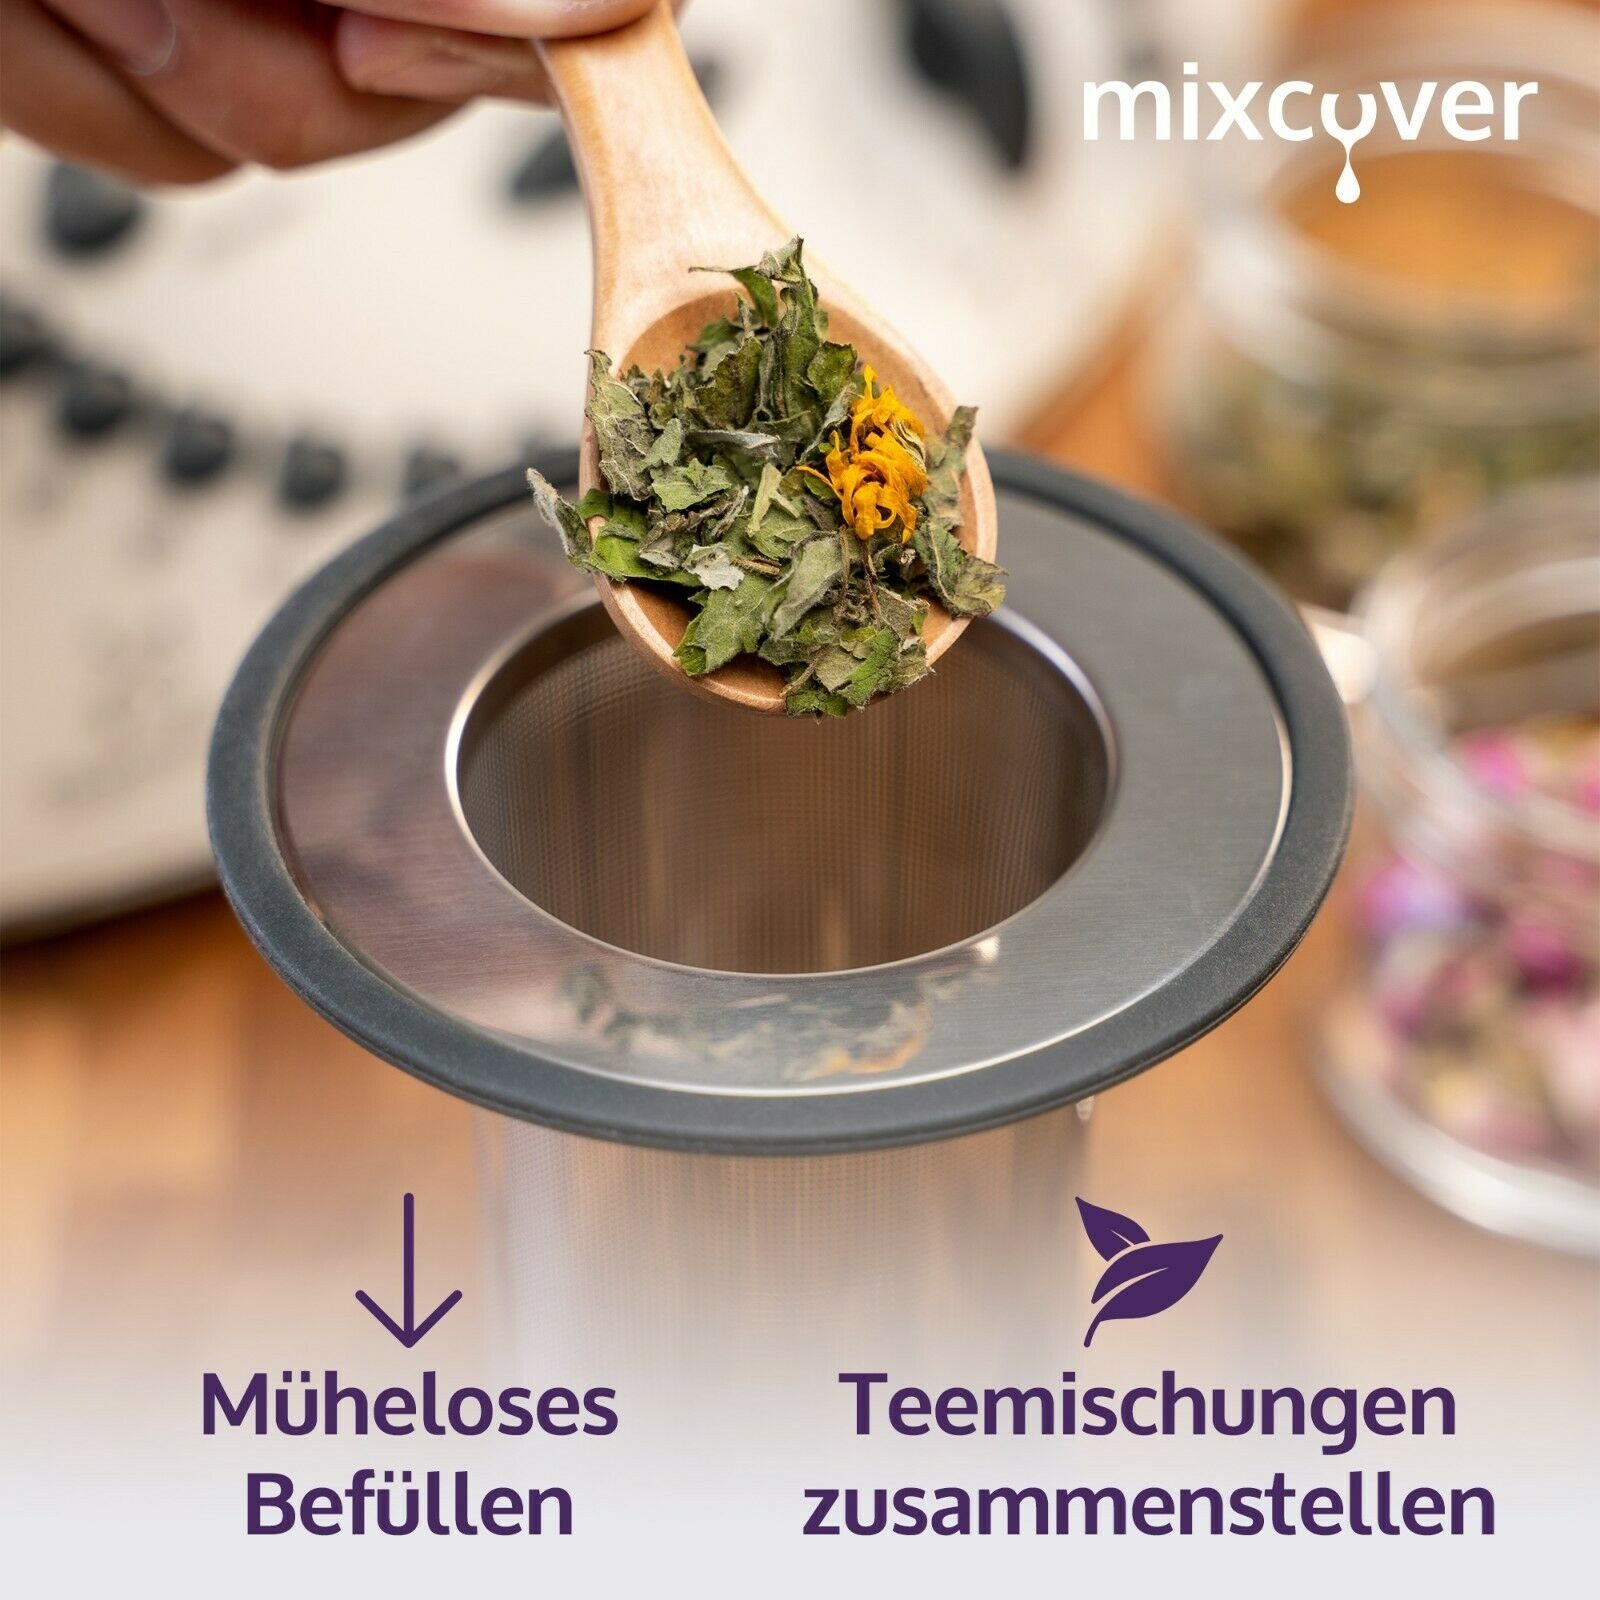 Mixcover Küchenmaschinen-Adapter Teefilter für mixcover TM31 Thermomix